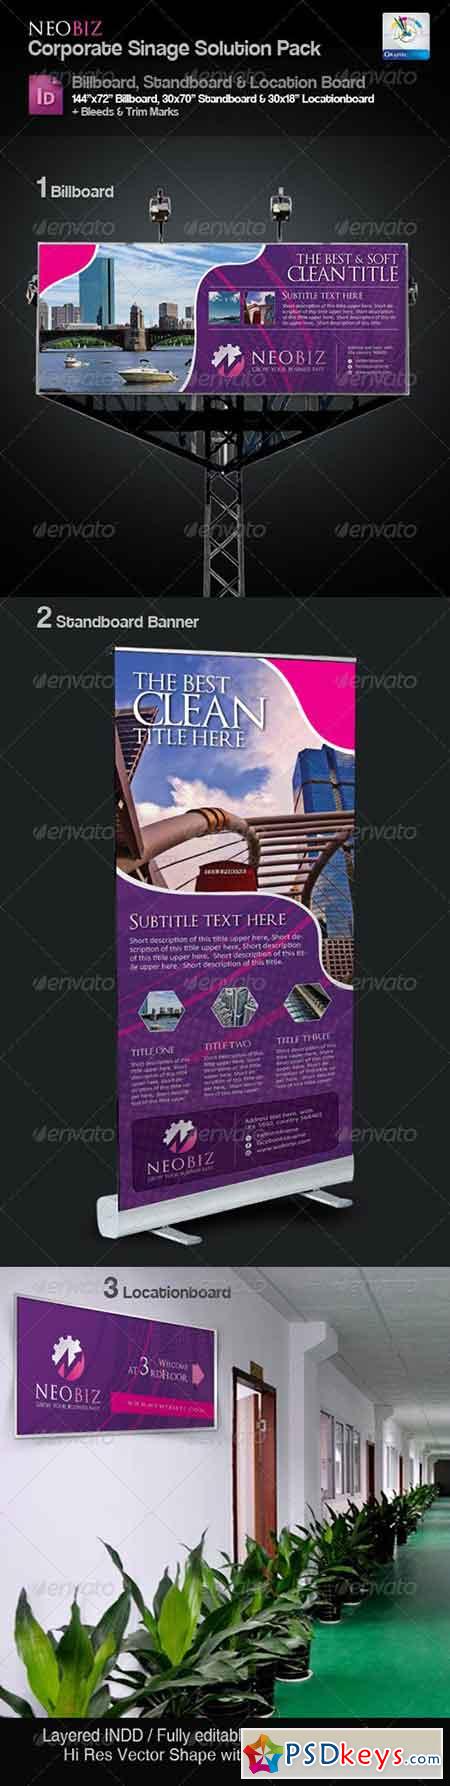 NeoBiz Clean Sinage Solution Pack 3373971